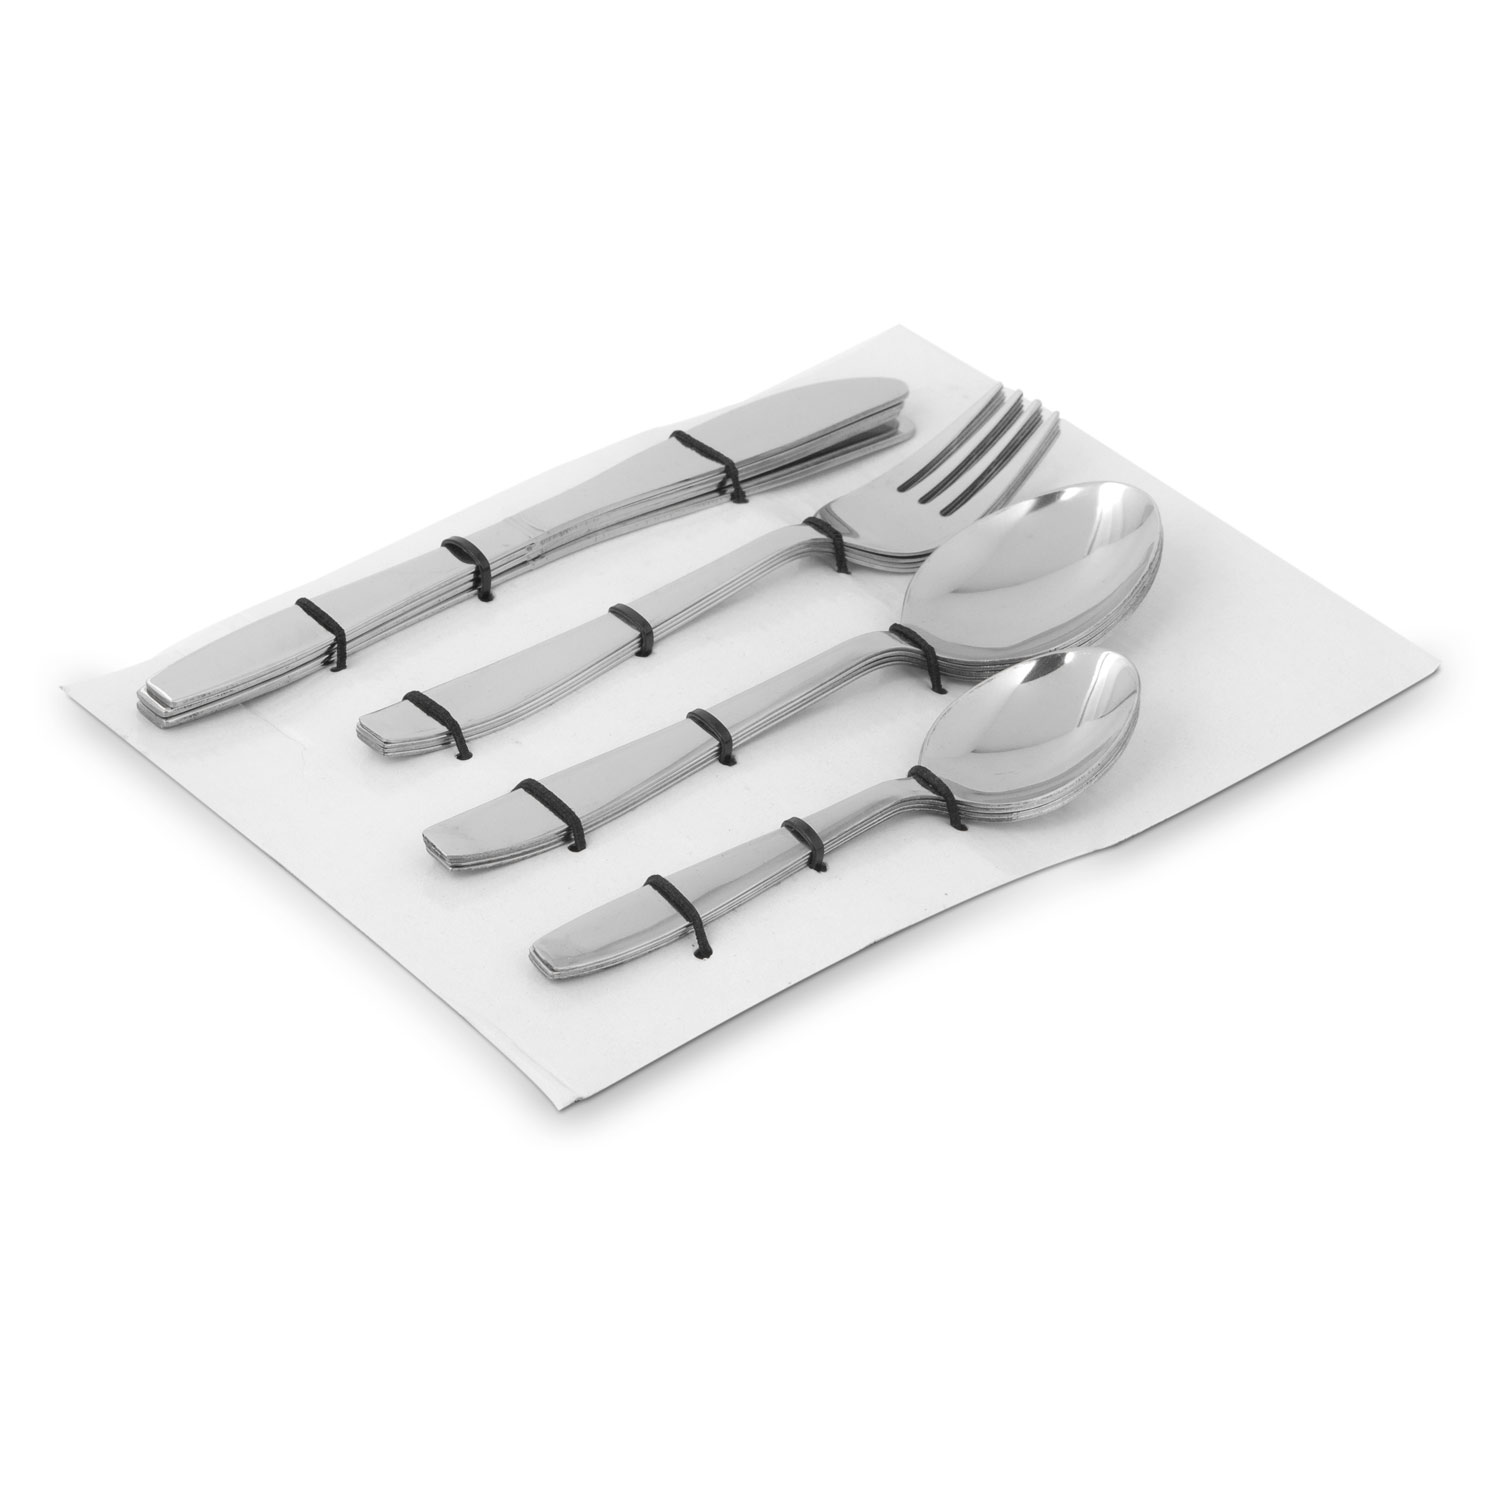 Rk S/S Cutlery Set 16 Pcs, Rk0112, Fusion